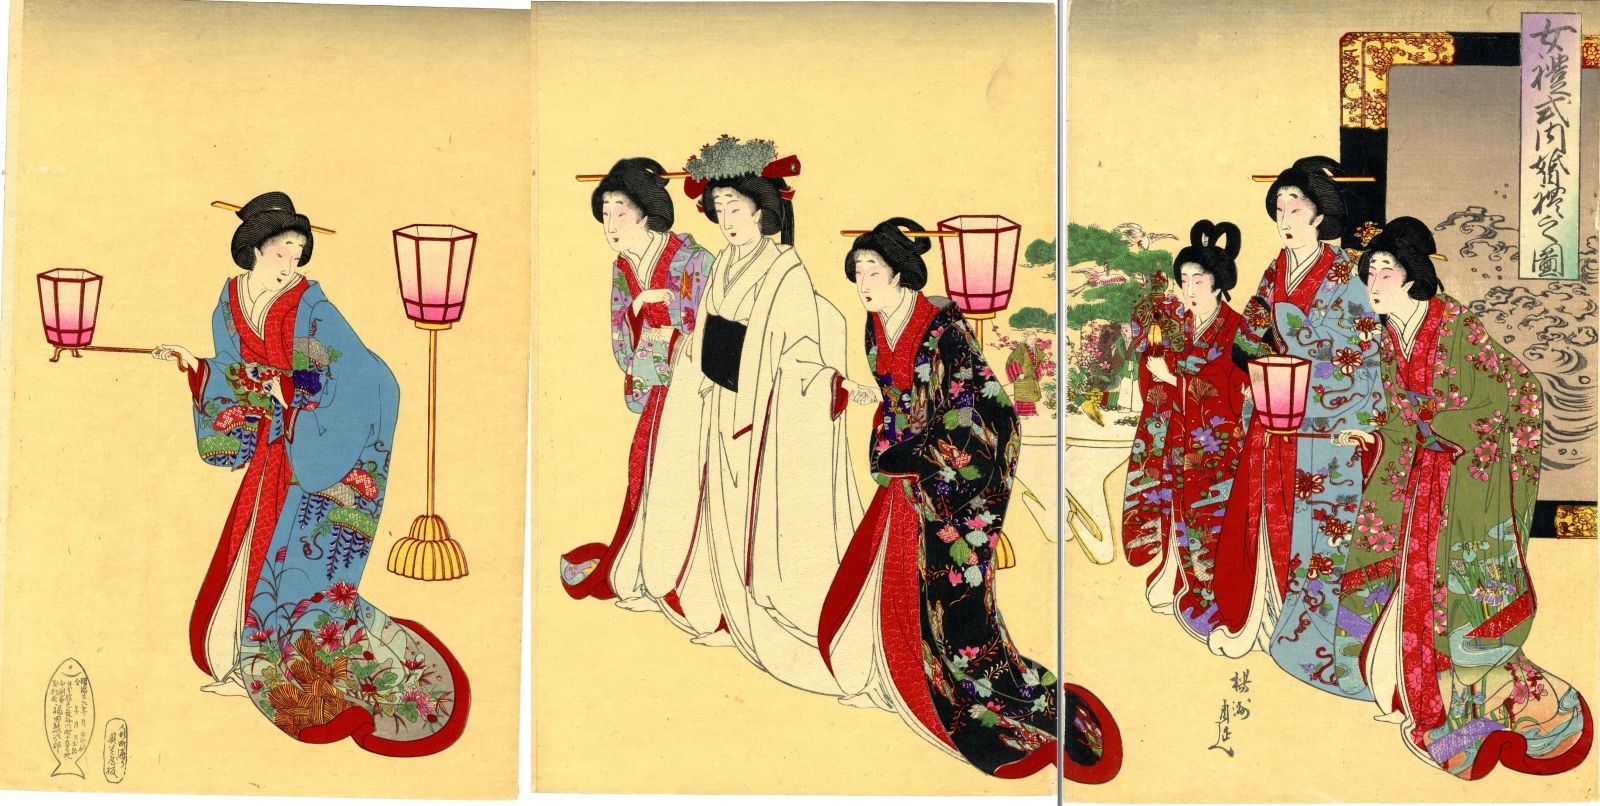 Chikanobu, Toyohara 1838-1912 Triptyque, dat. 1869 De la série "Onna reishiki no&hellip;